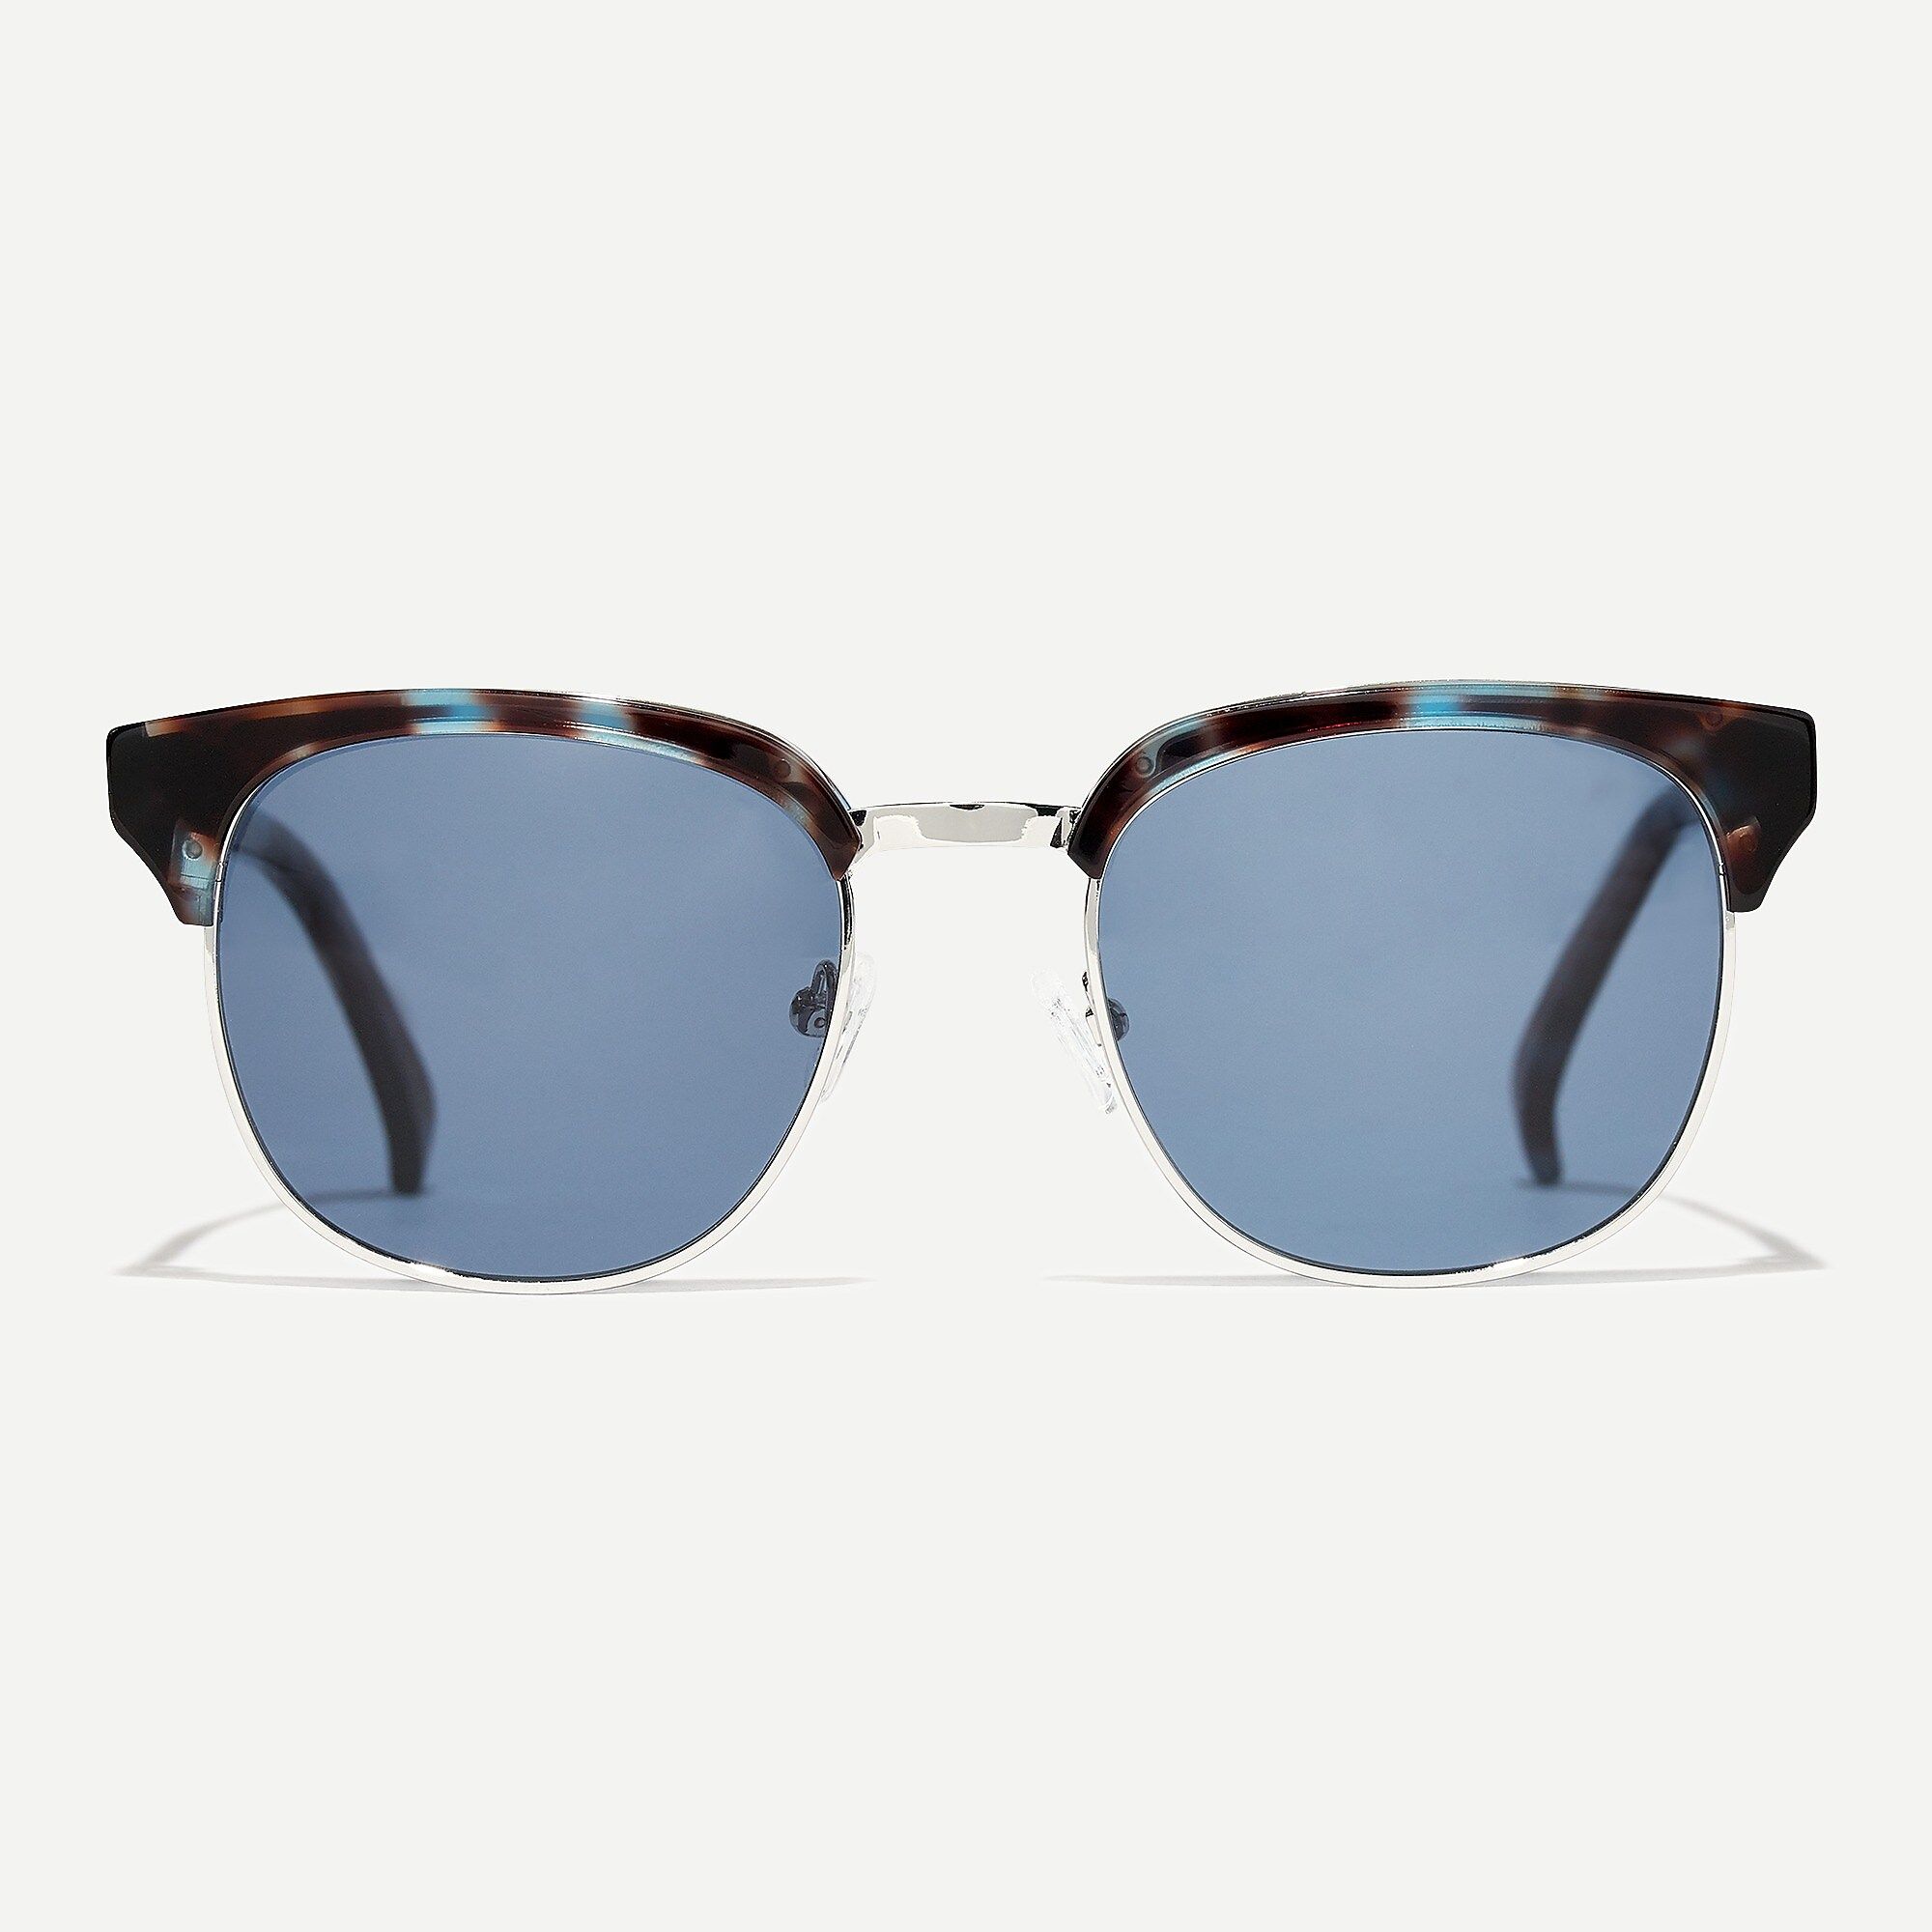 Whitecap sunglasses | J.Crew US